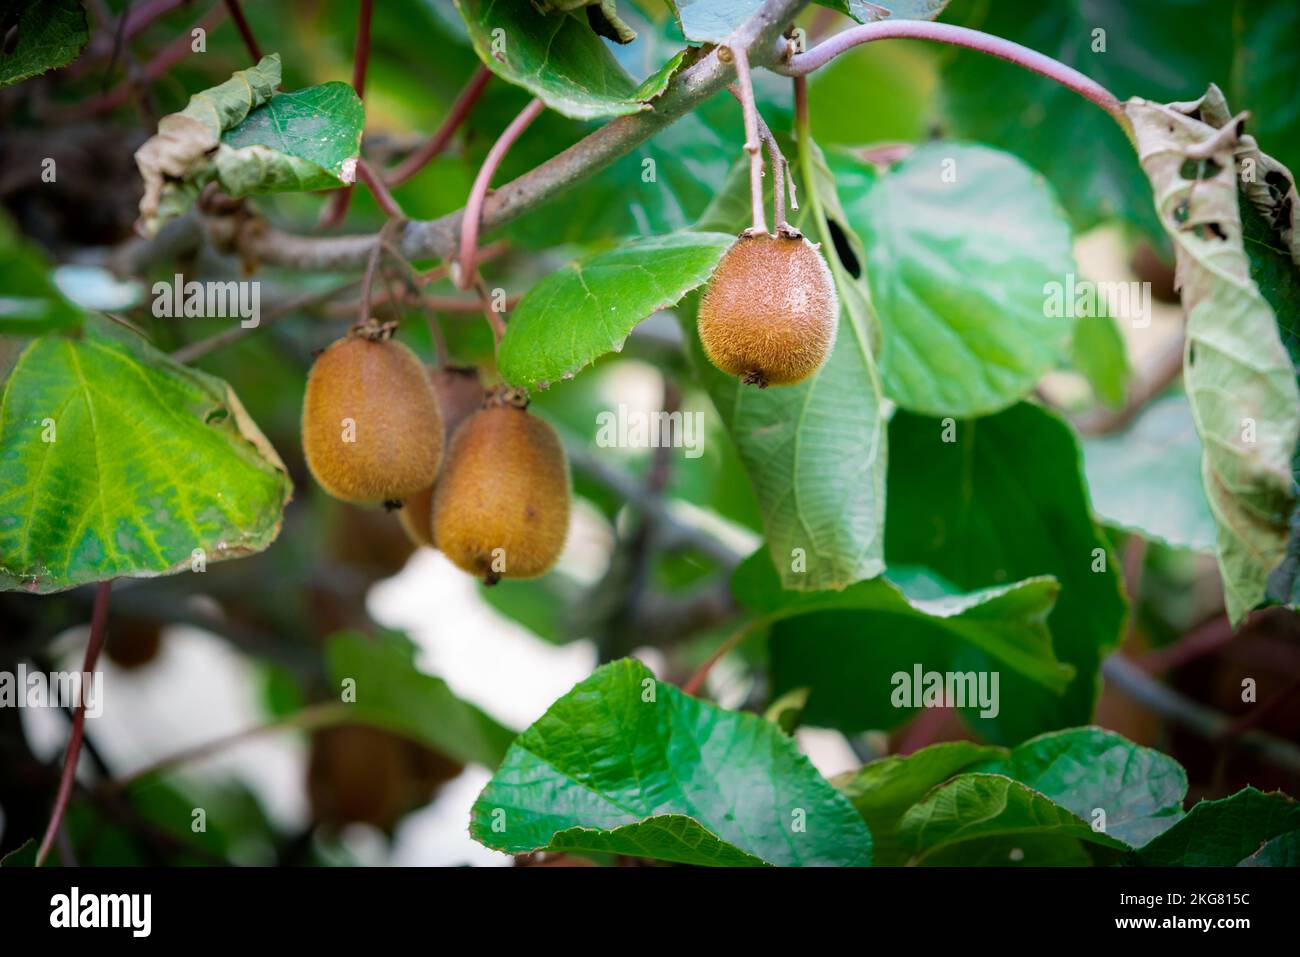 Closeup shot of kiwi plants hanging on tree branches Stock Photo